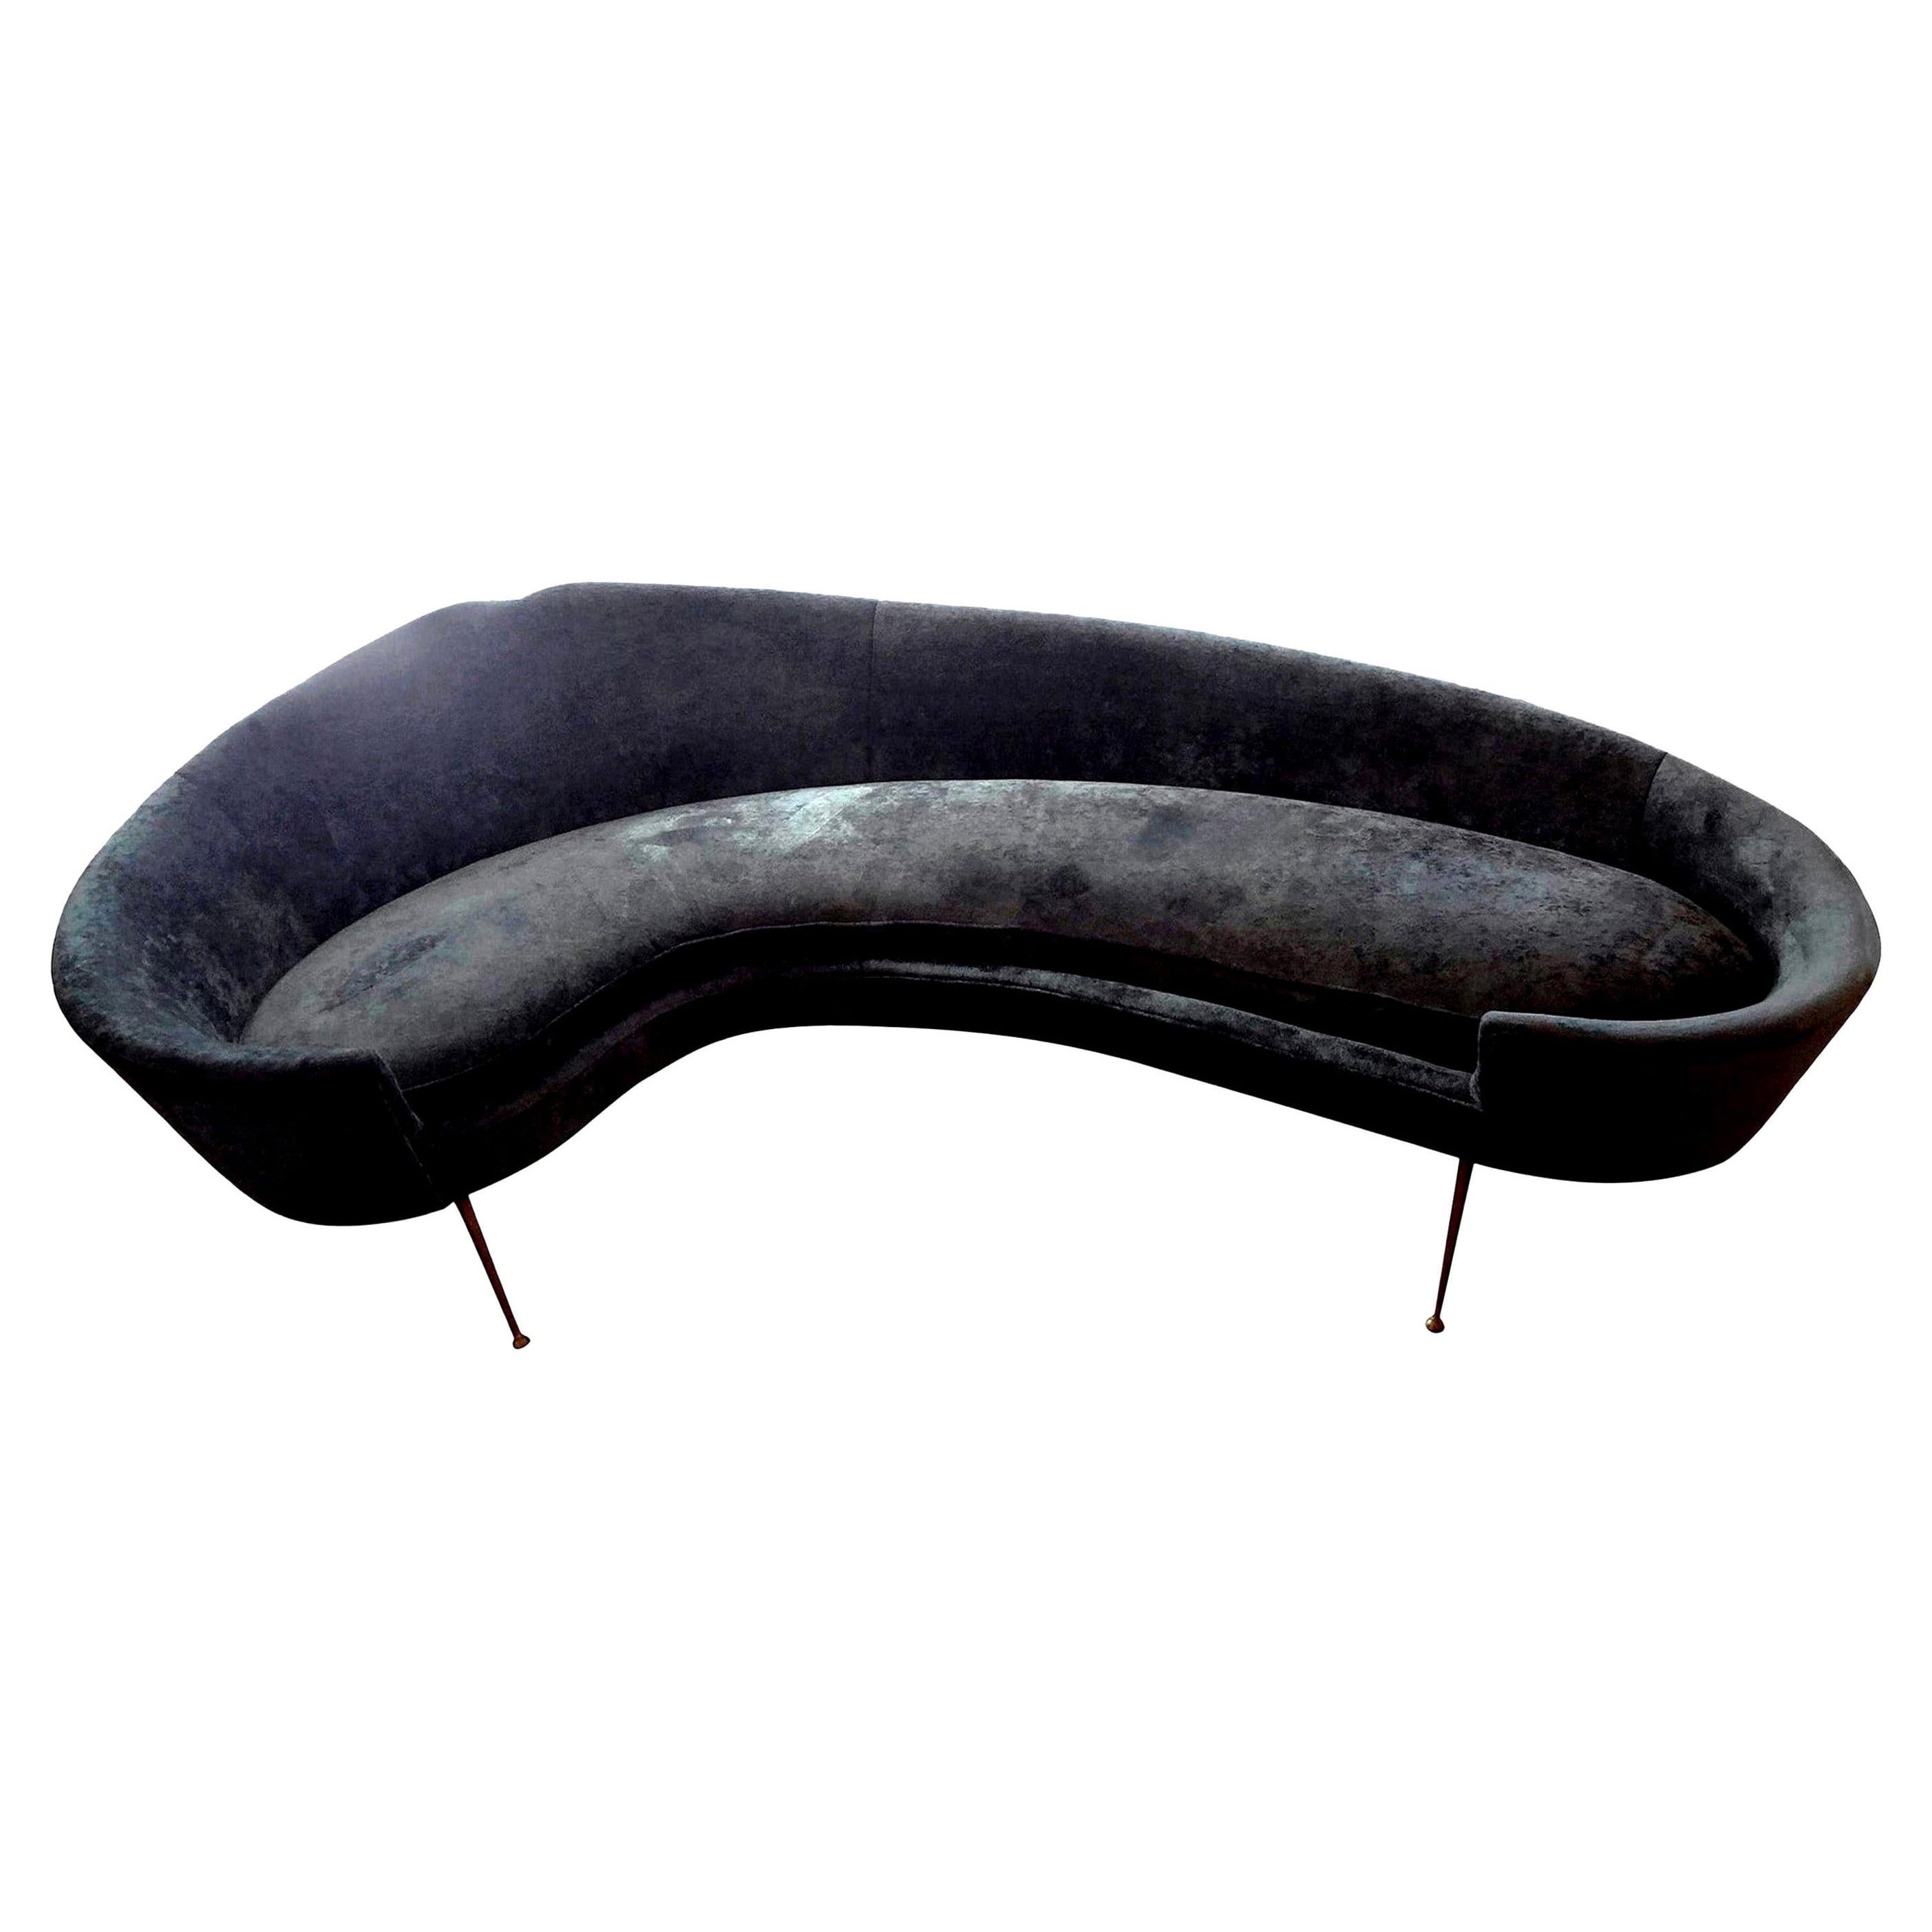 Midcentury Italian Curved Sofa with Brass Legs Attributed to Federico Munari